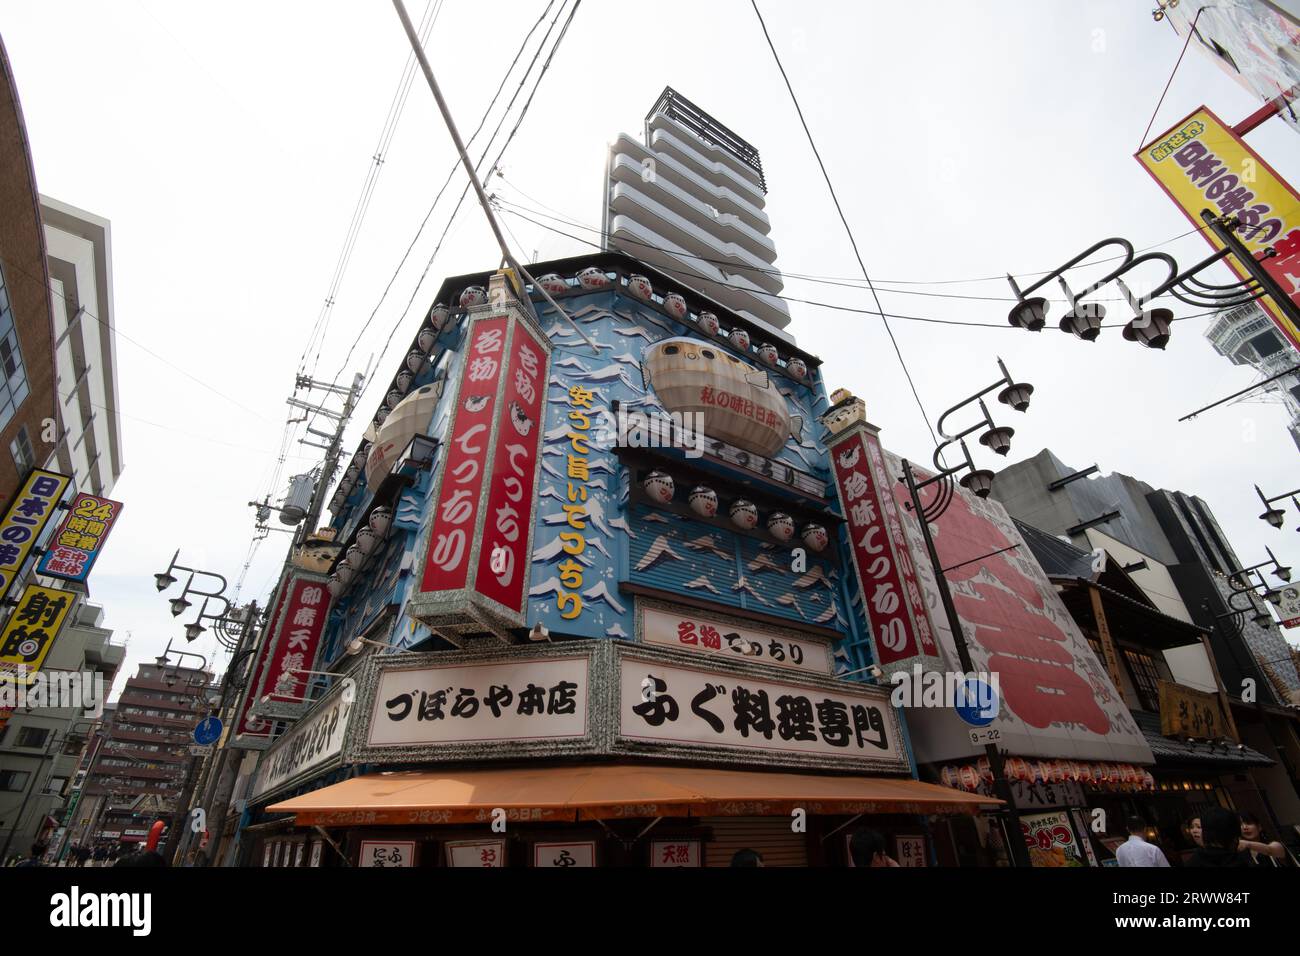 Auffällige Schilder für Restaurants Flut, Shinsekai, Osaka, Japan. Stockfoto